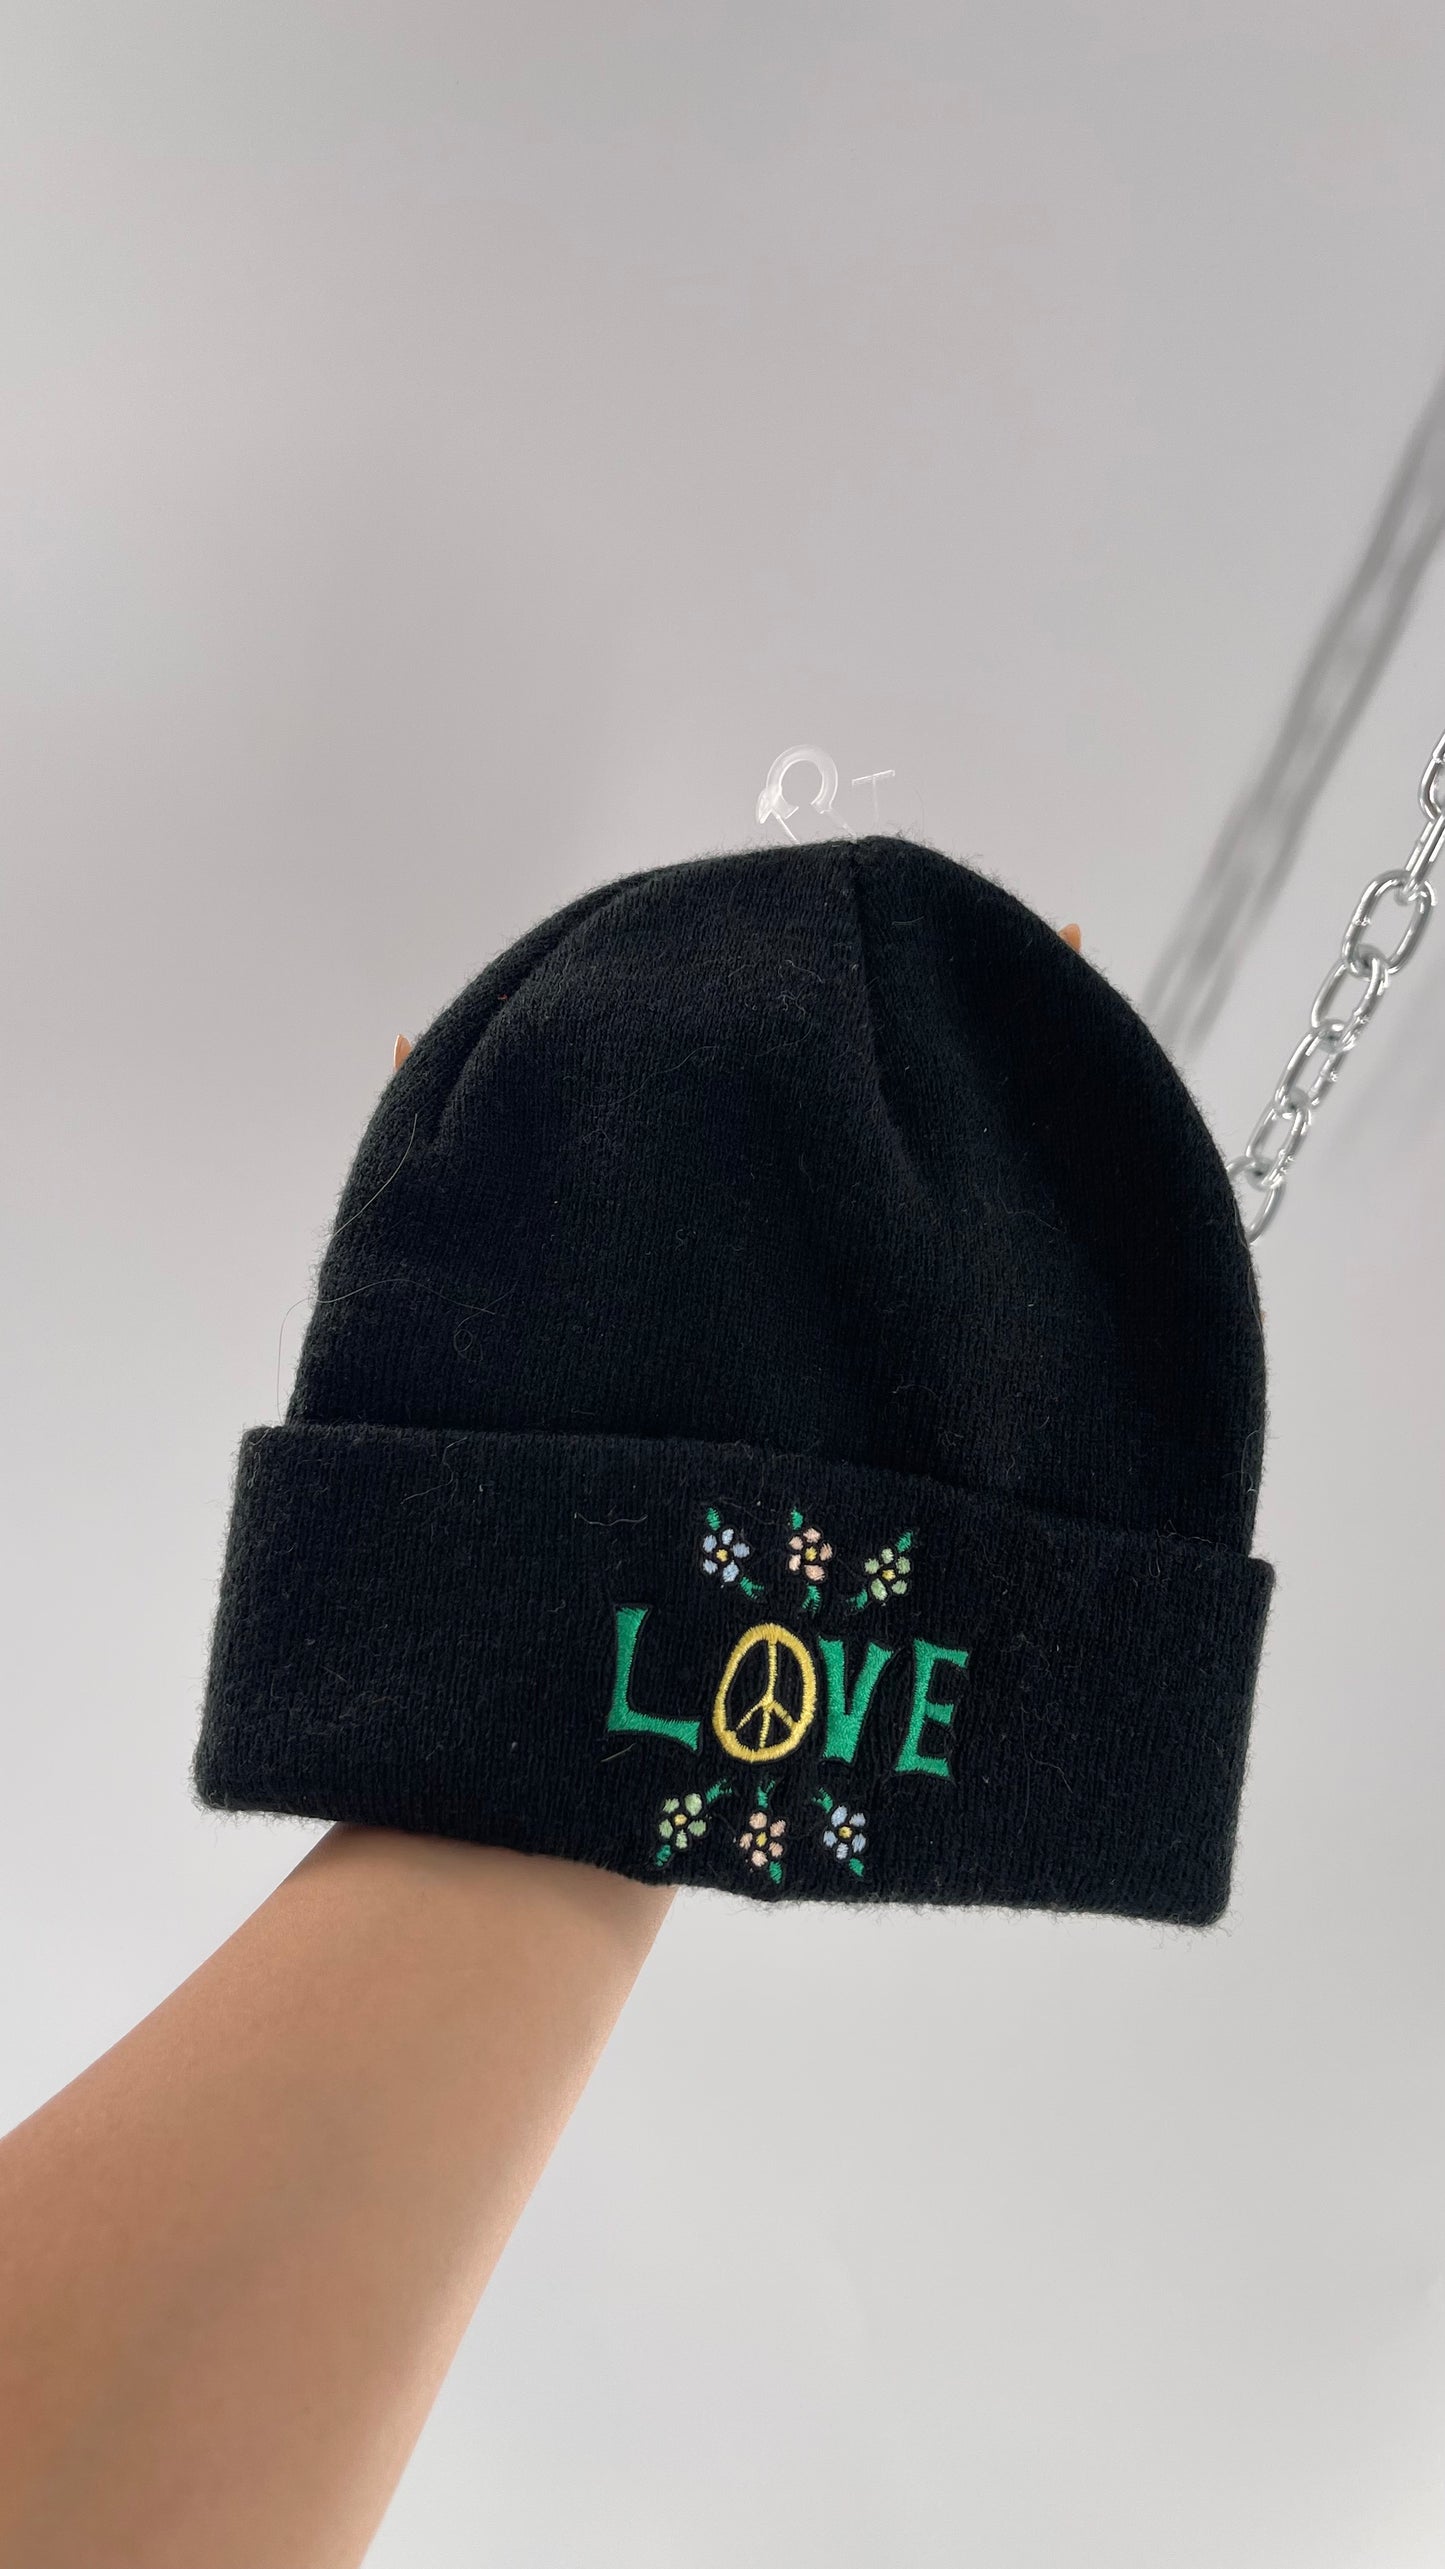 Coney Island Picnic Black Embroidered LOVE beanie